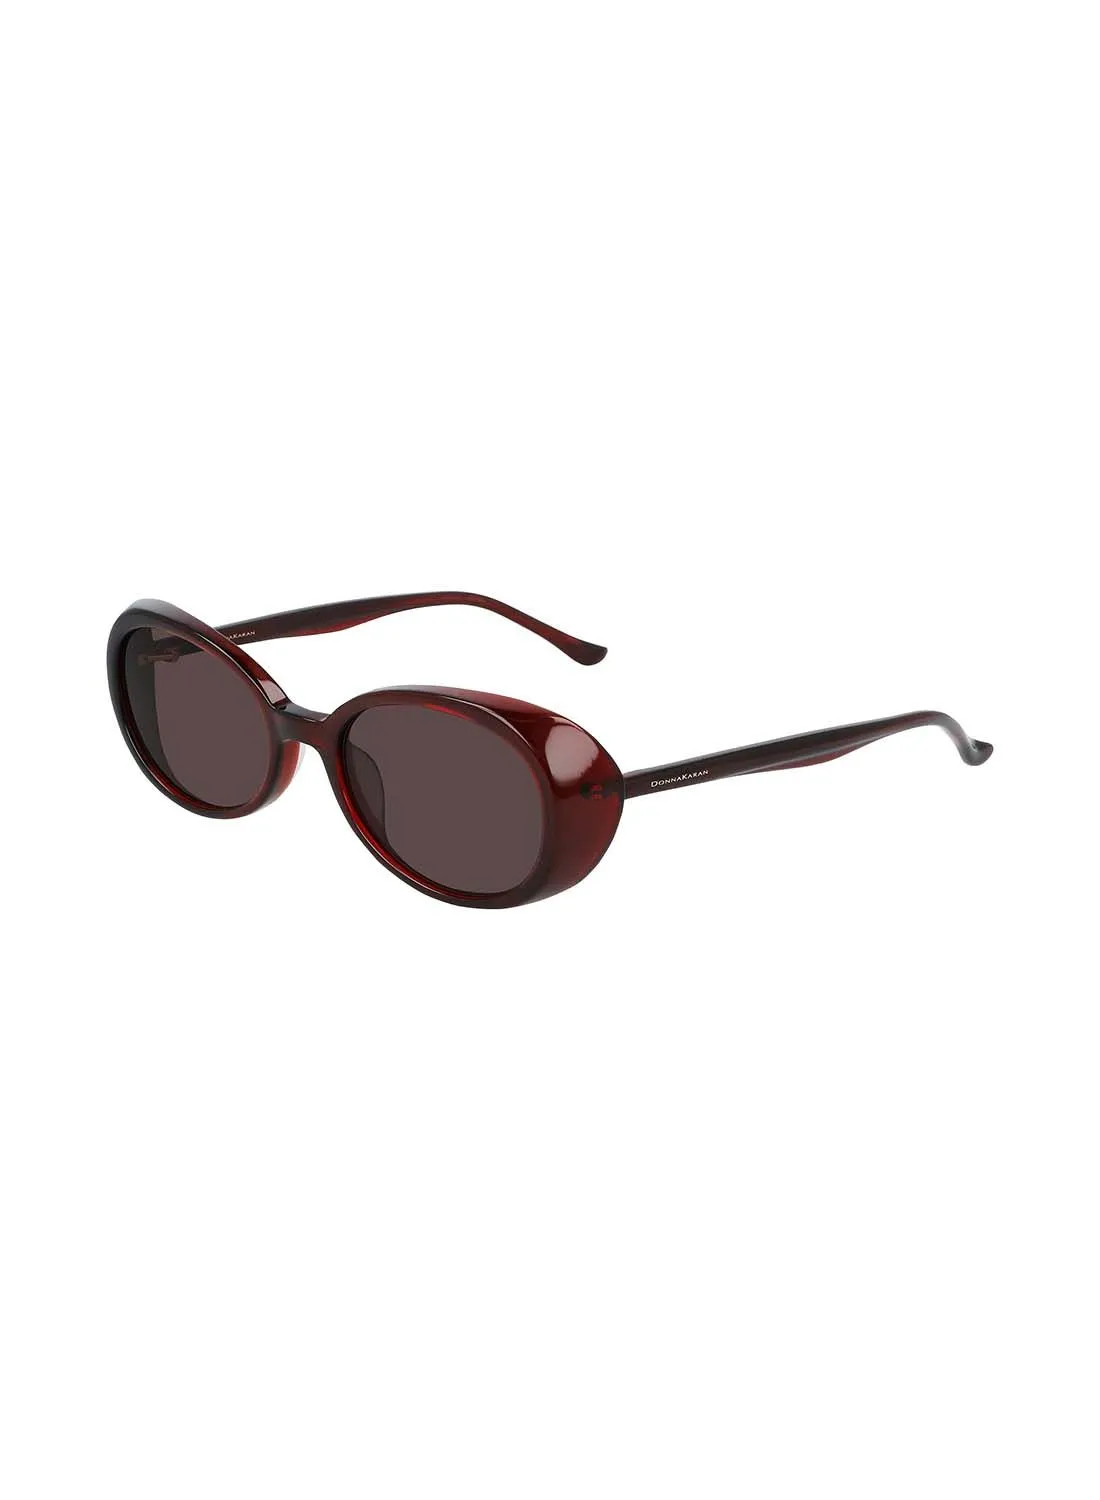 Donna Karan Full Rim Acetate Oval Sunglasses DO510S 5118 (605)